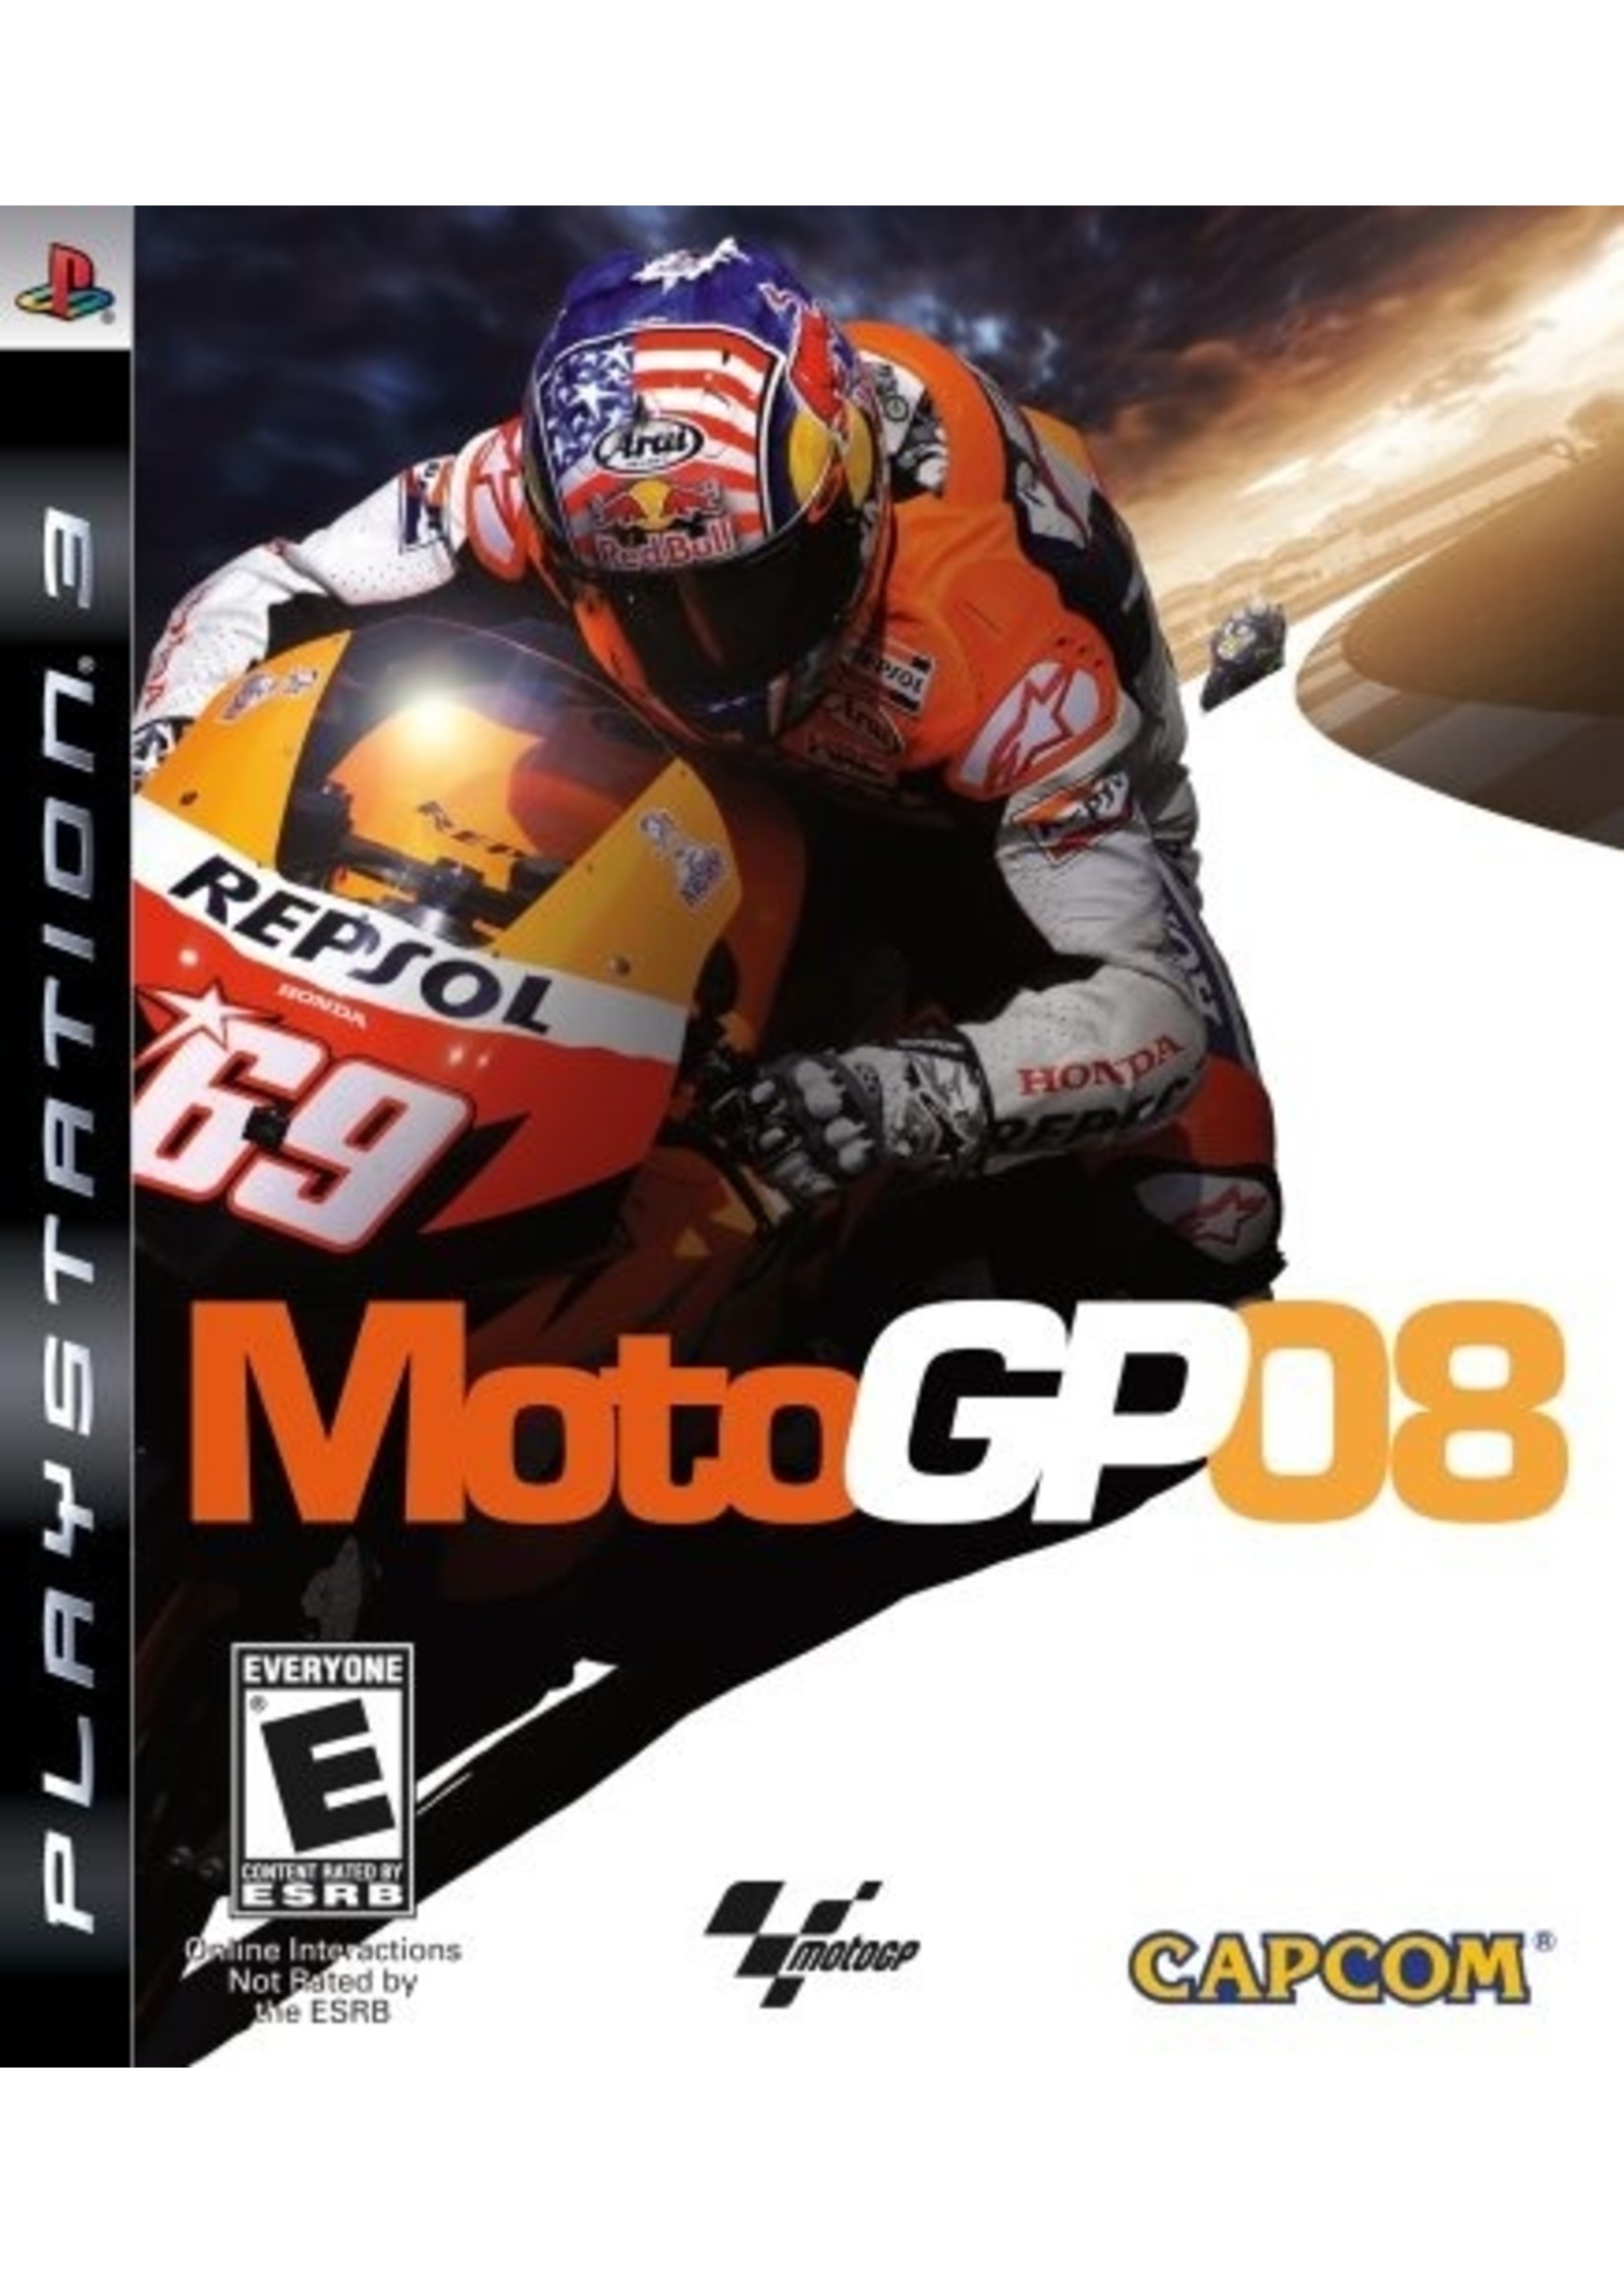 Sony Playstation 3 (PS3) MotoGP 08